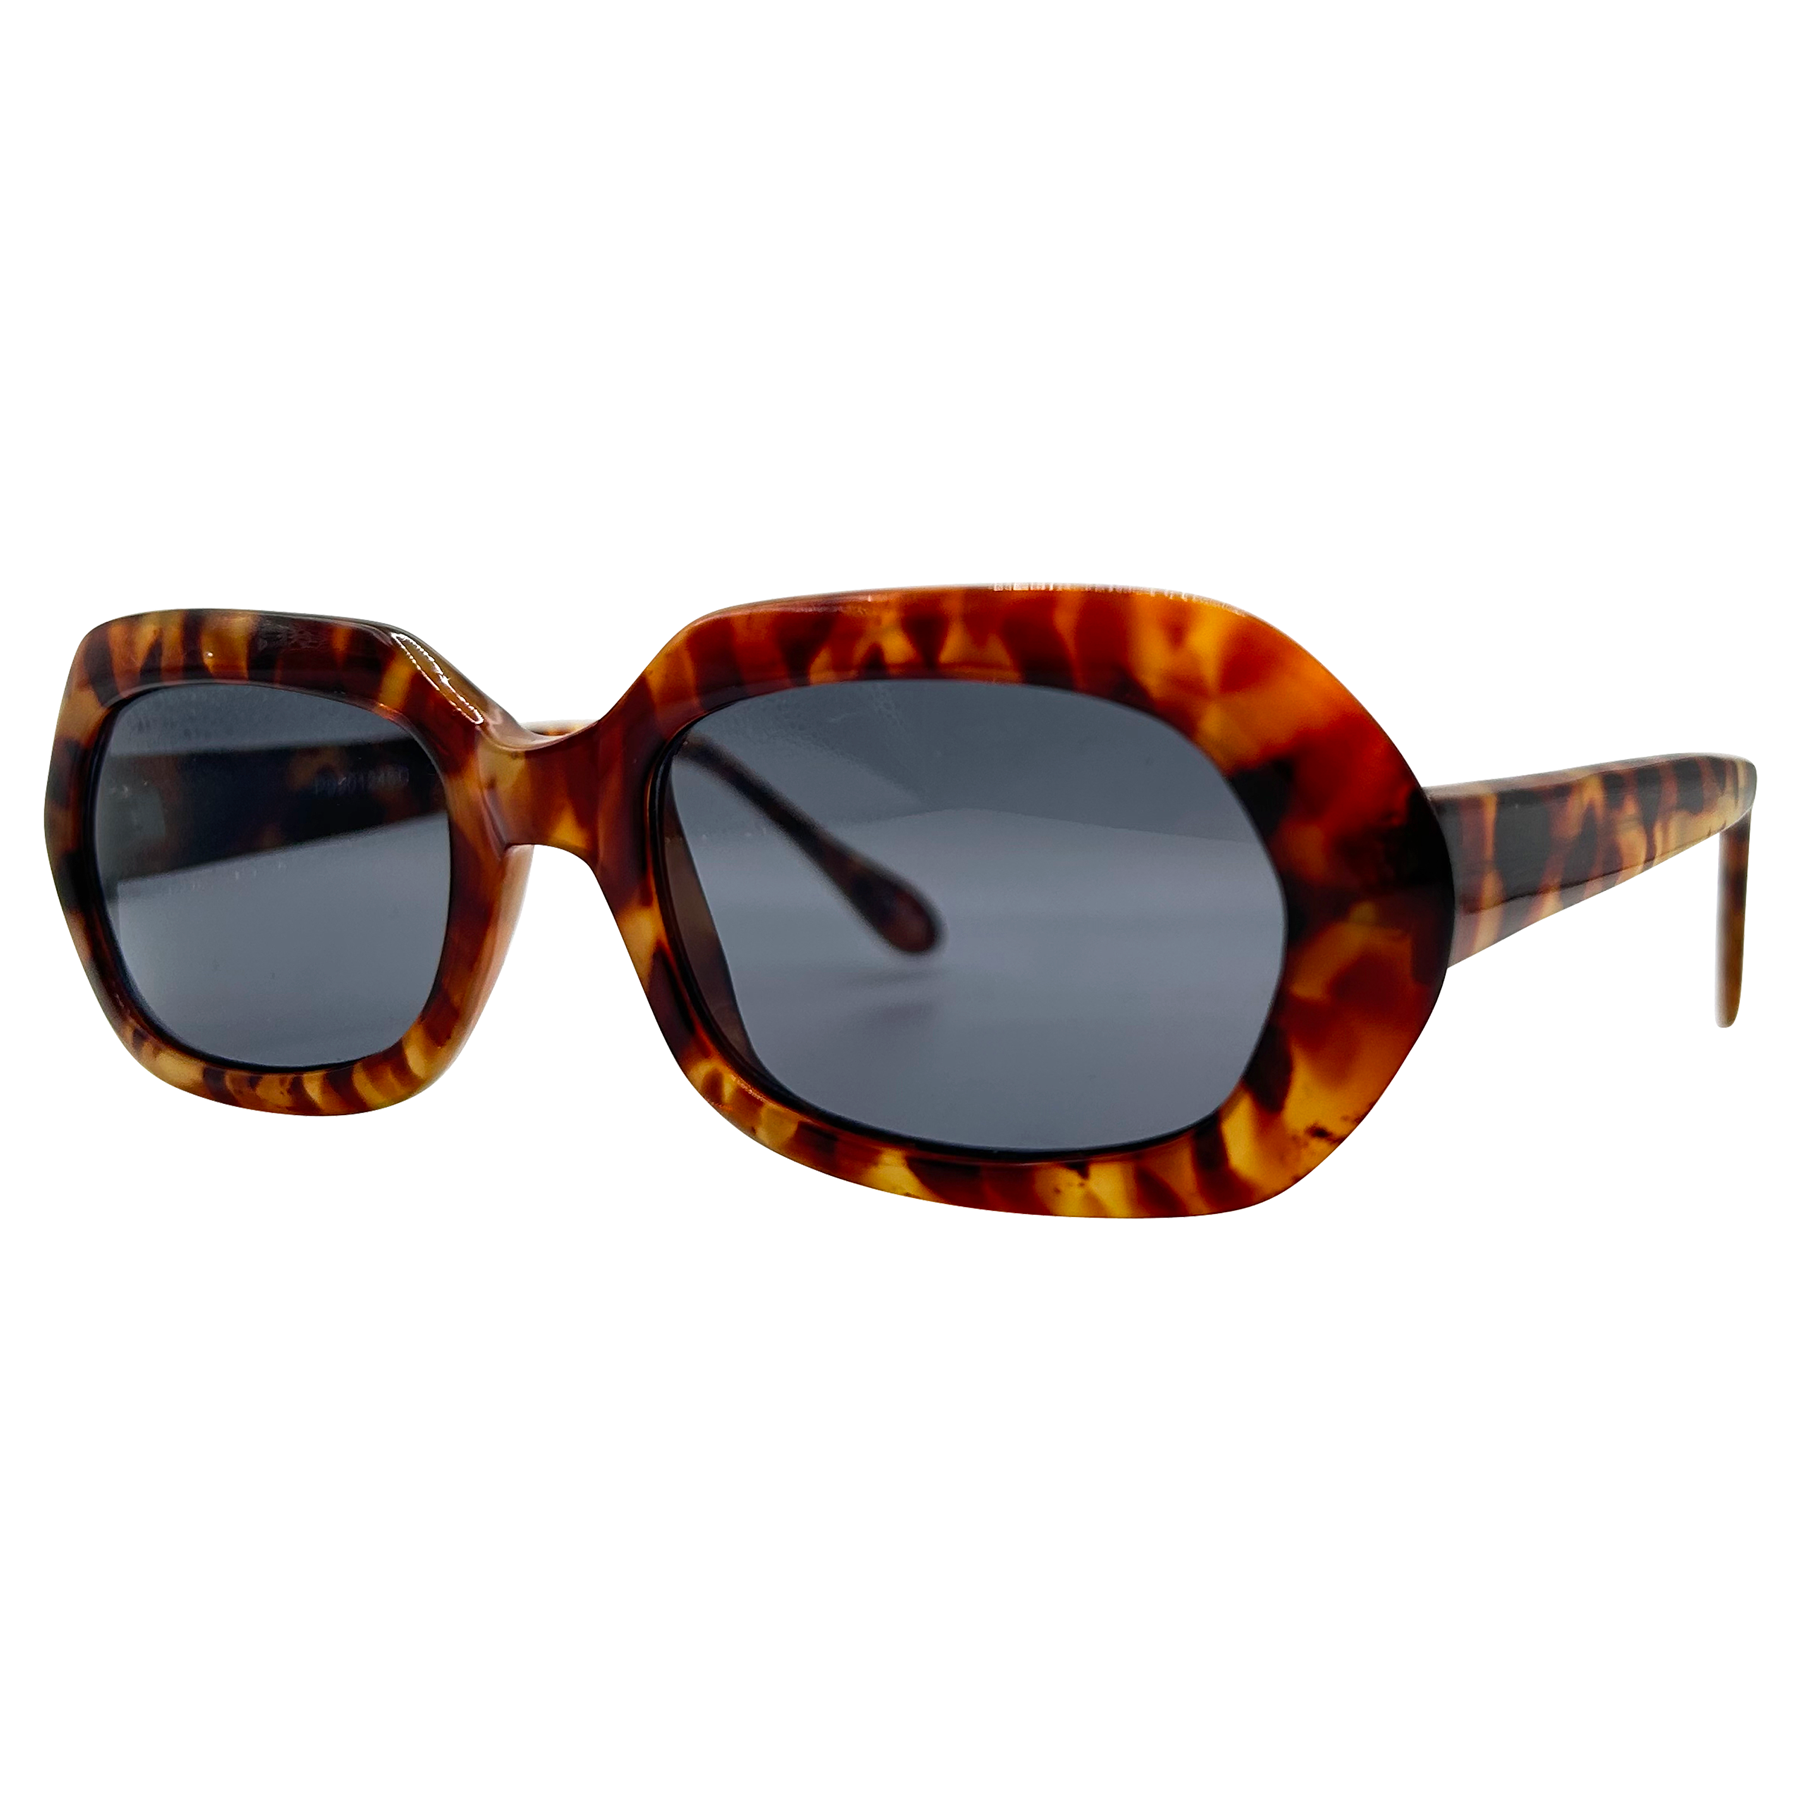 TUESDAY Toast/Super Dark Mod Sunglasses